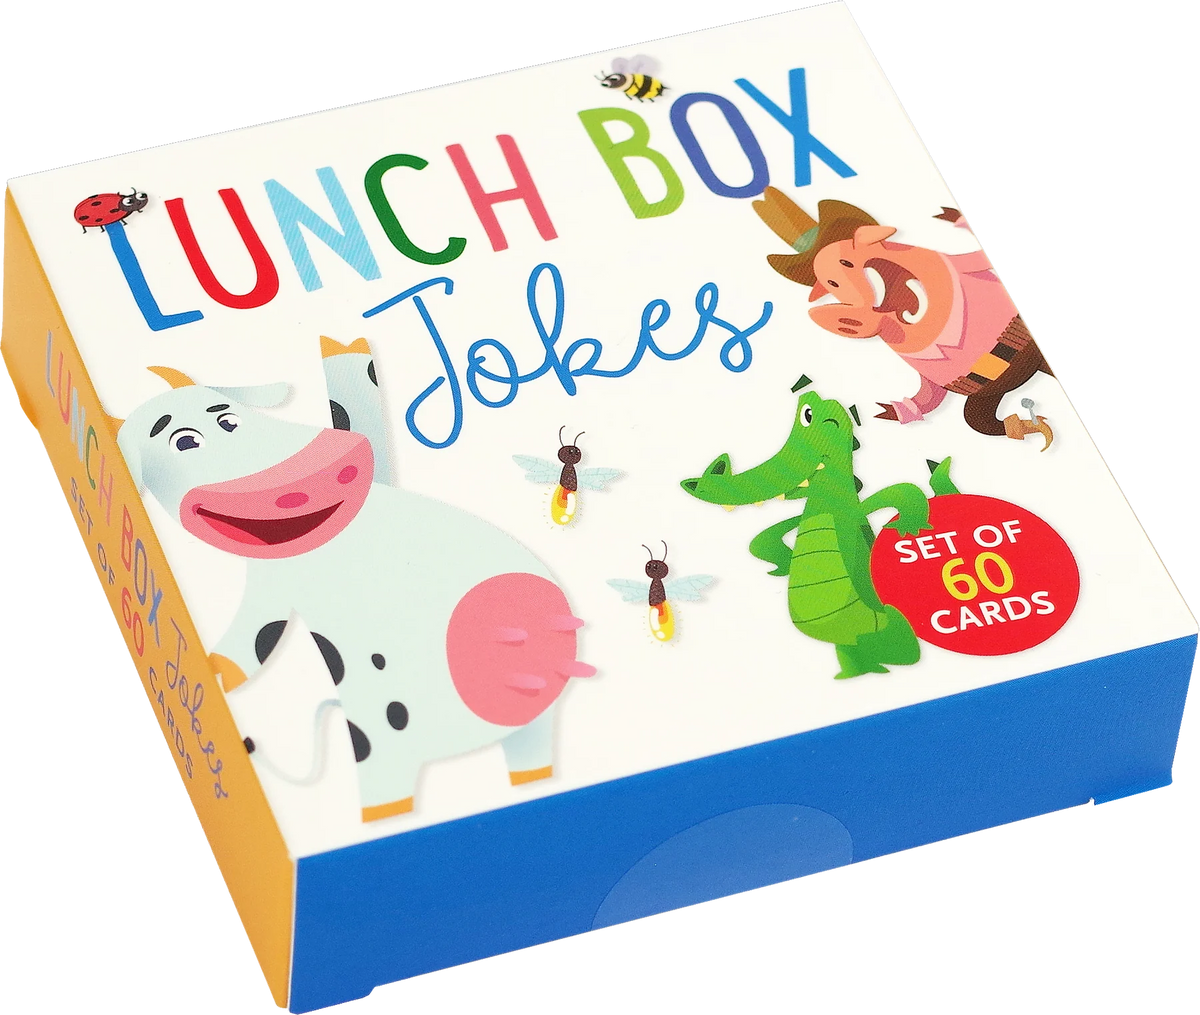 Lunch Box Jokes - 60 Cards